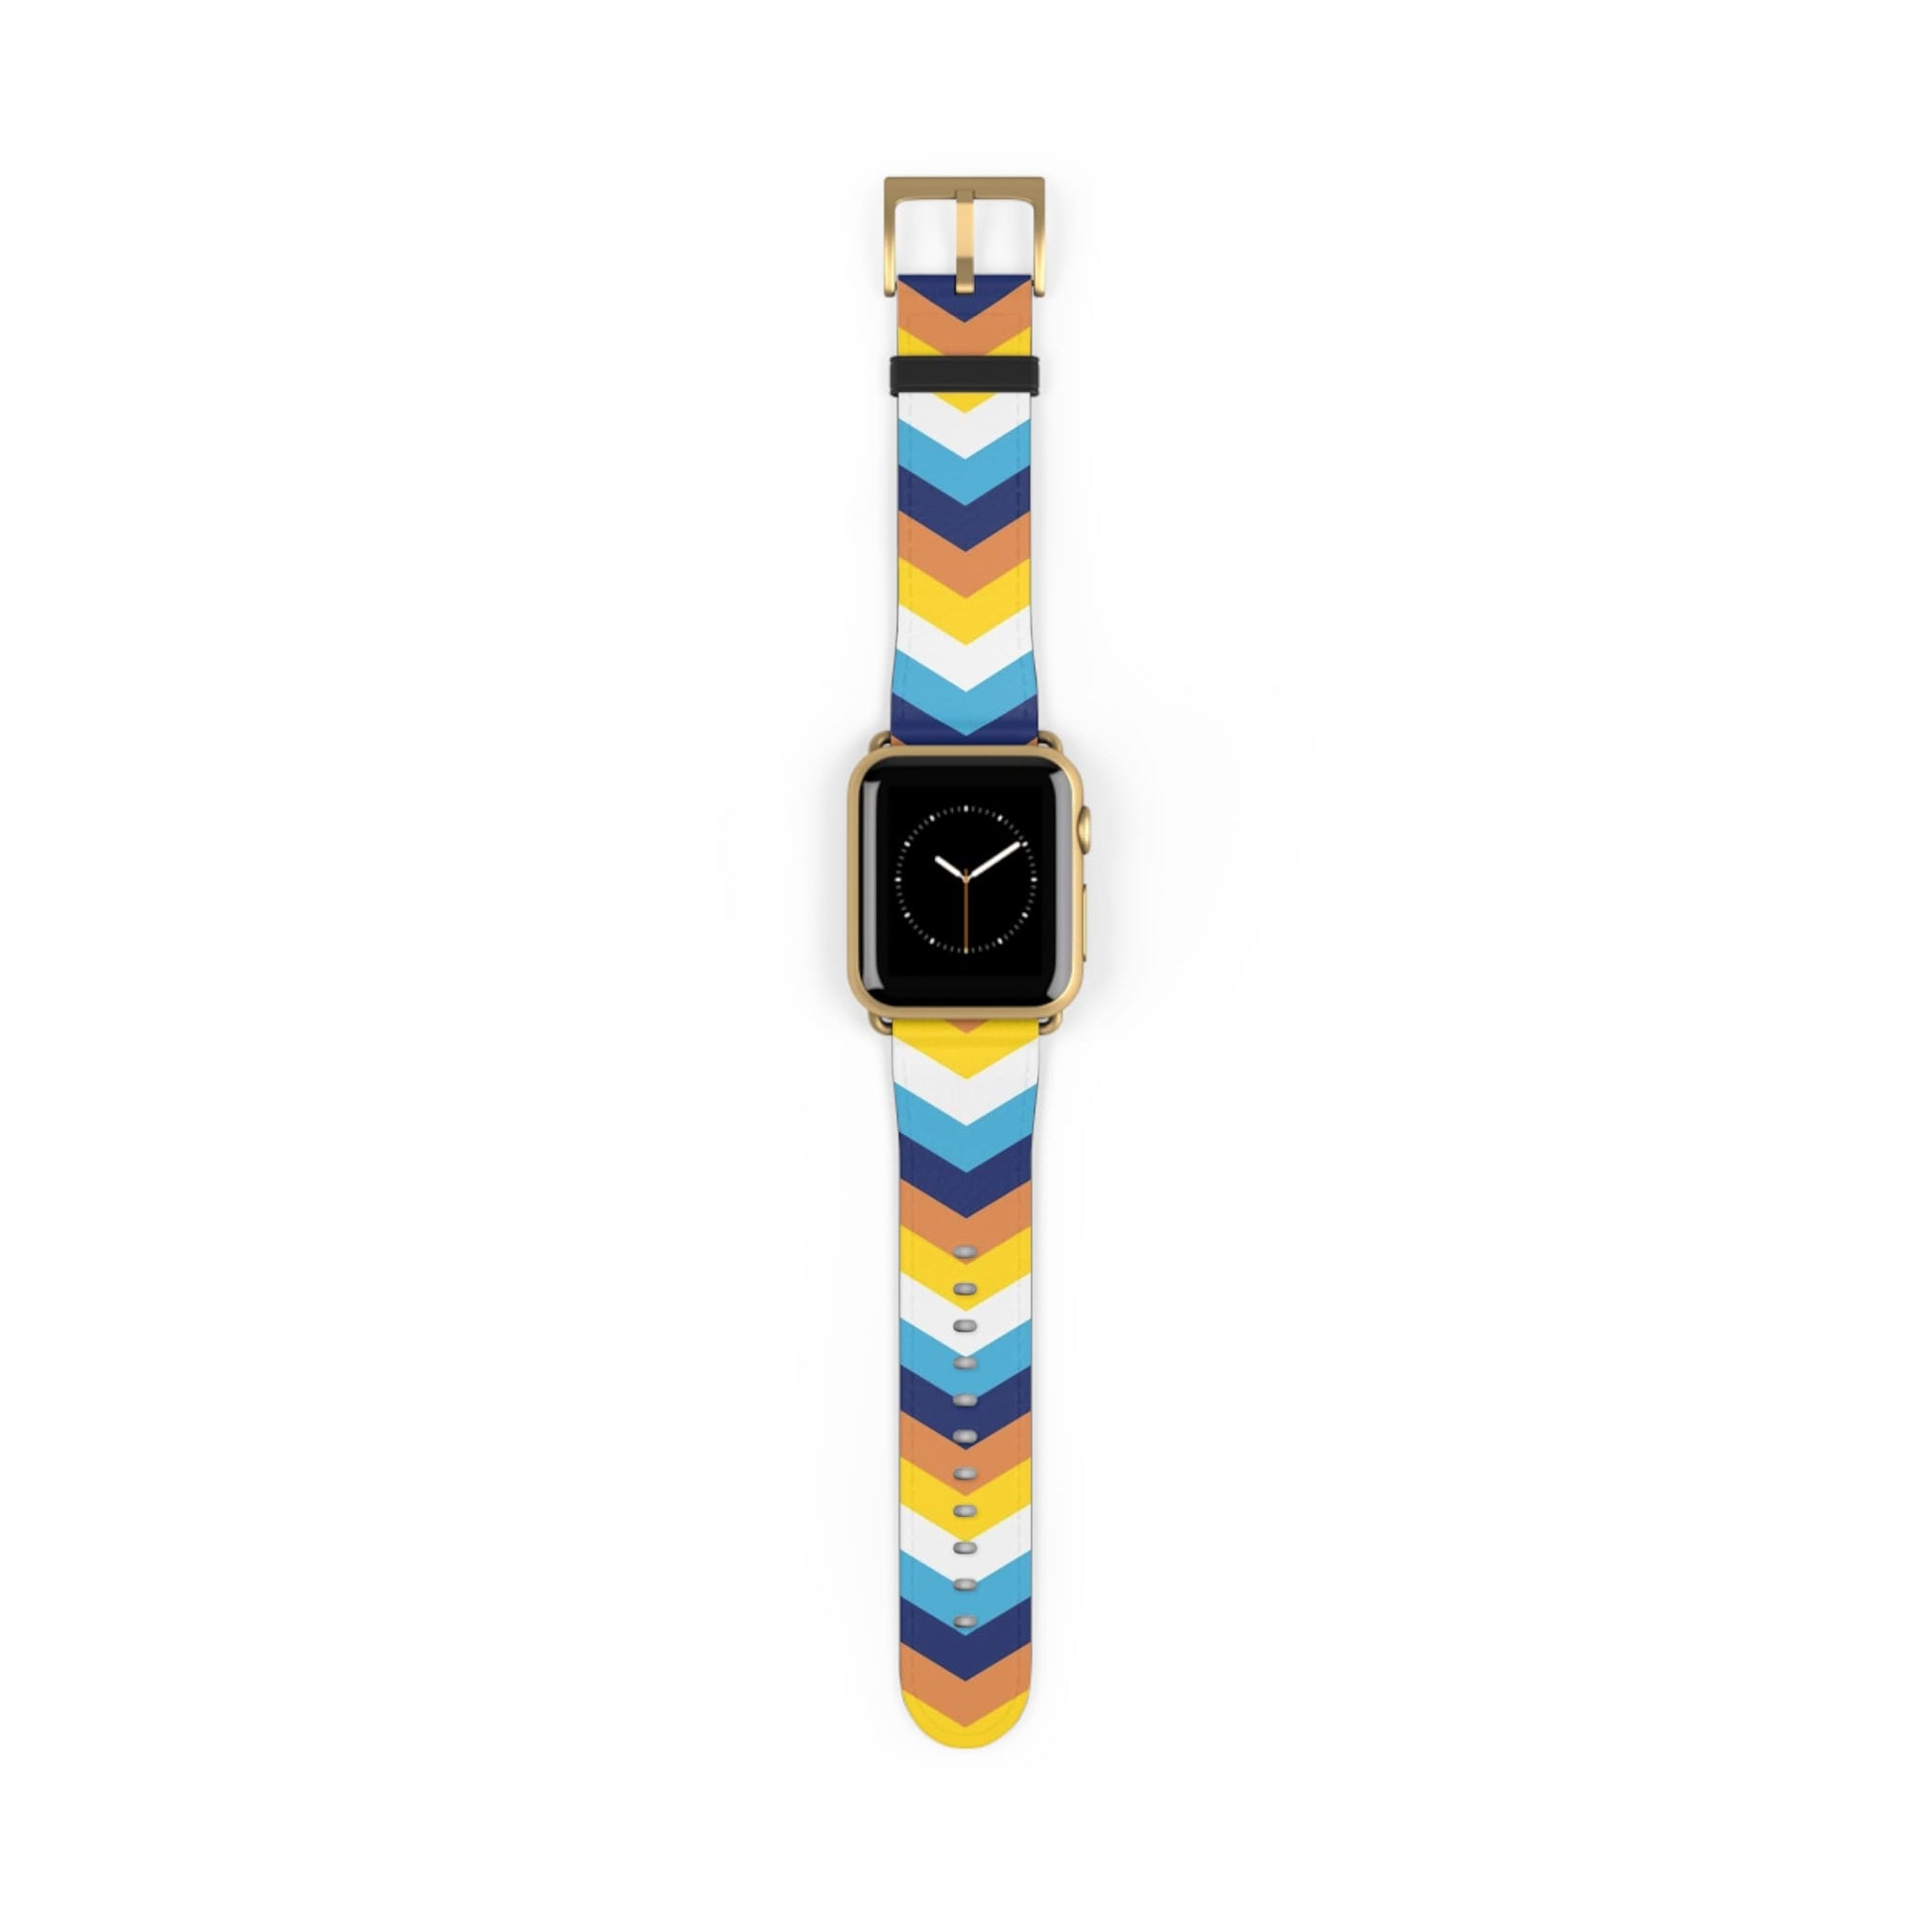 aroace apple watch band, discreet chevron pattern, gold